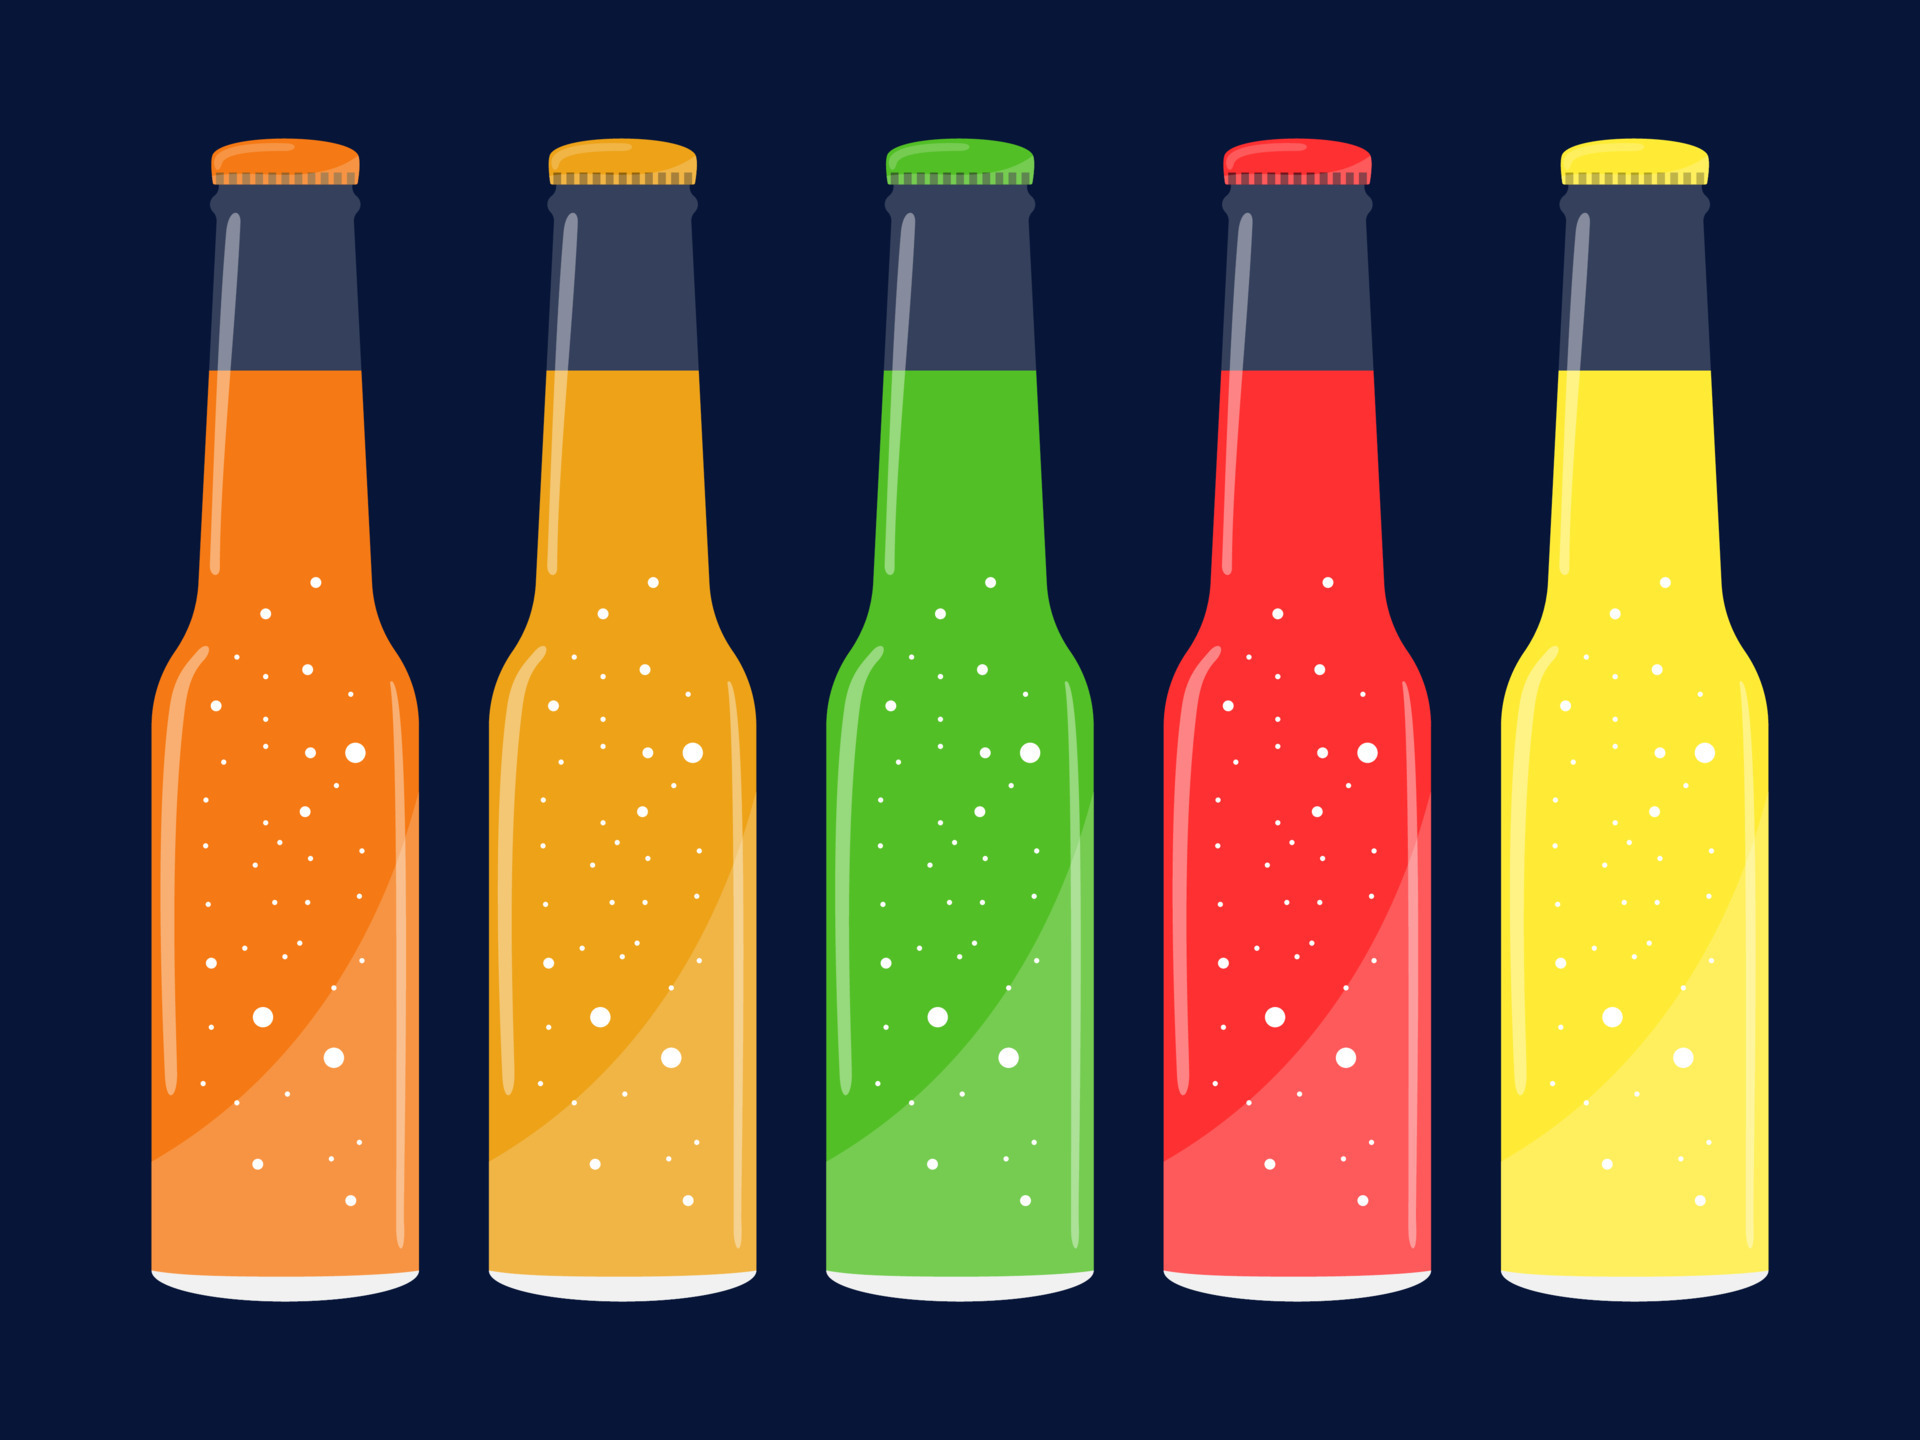 https://static.vecteezy.com/system/resources/previews/017/348/835/original/glass-soda-bottles-isolated-on-grey-background-bottle-of-lemonade-glass-bottles-with-fruit-juice-set-of-carbonated-drinks-vector.jpg